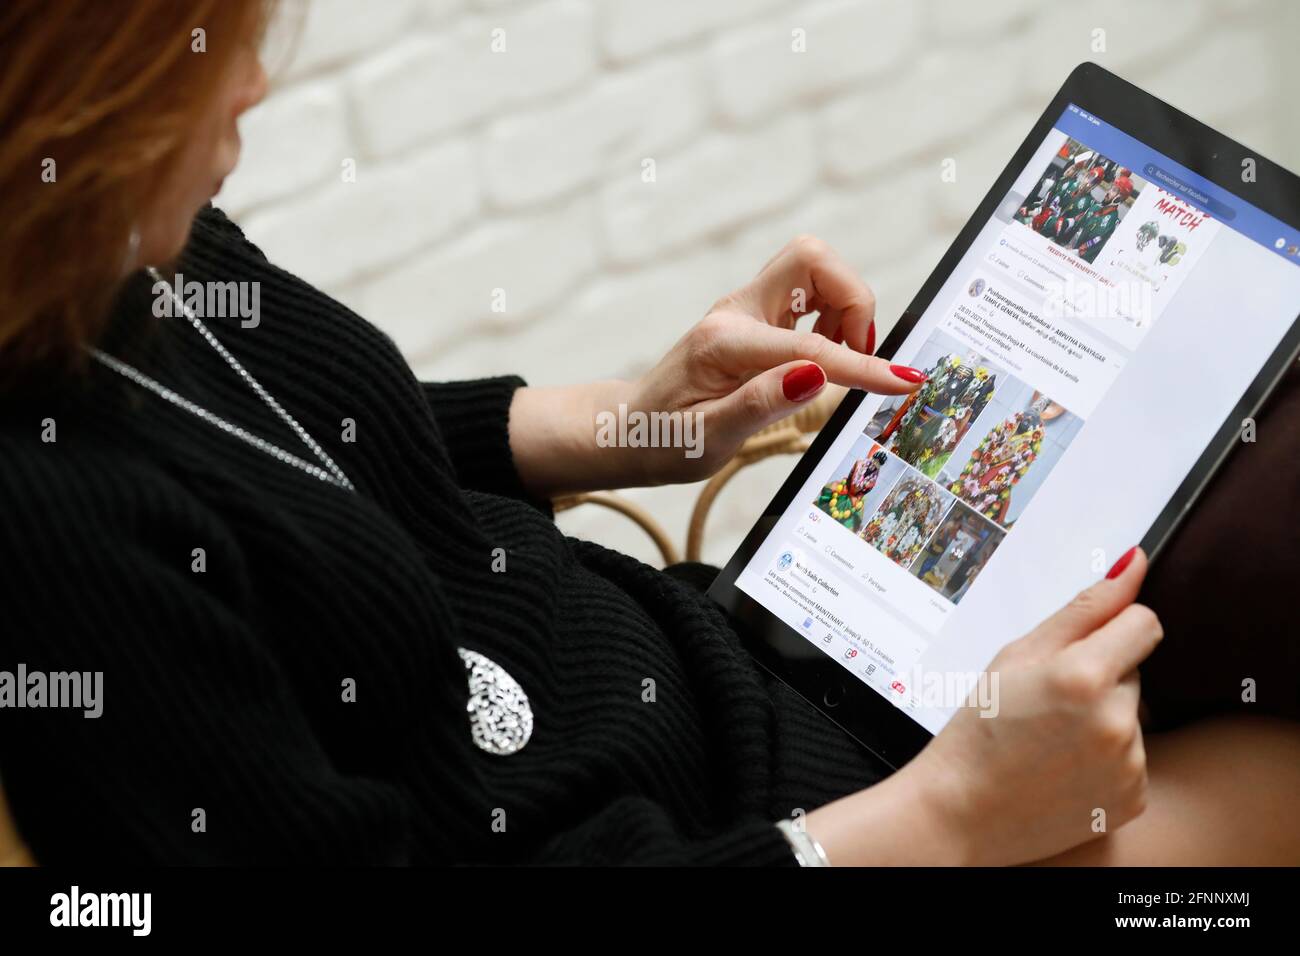 Woman reading  facebook on an Apple iPad digital tablet.  Facebook social media app.  France. Stock Photo